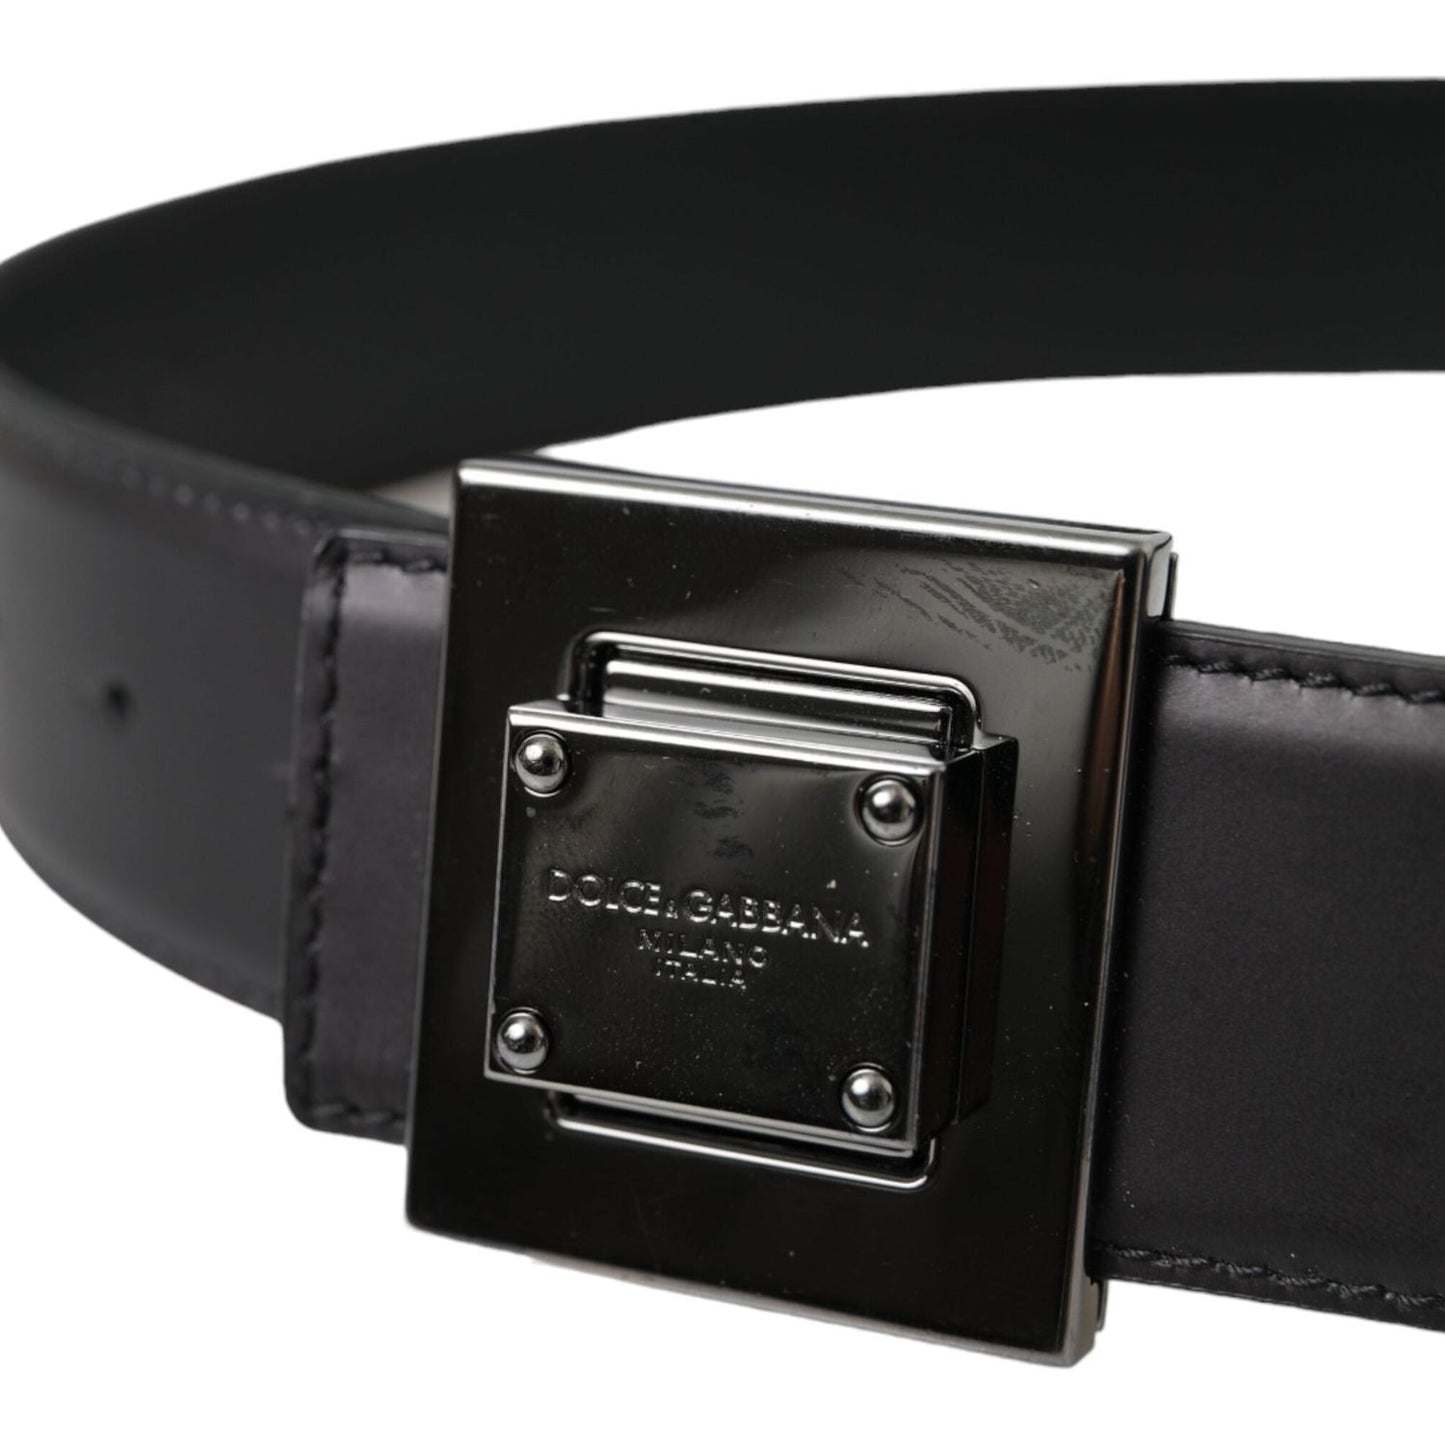 Black Calf Leather Square Metal Buckle Belt